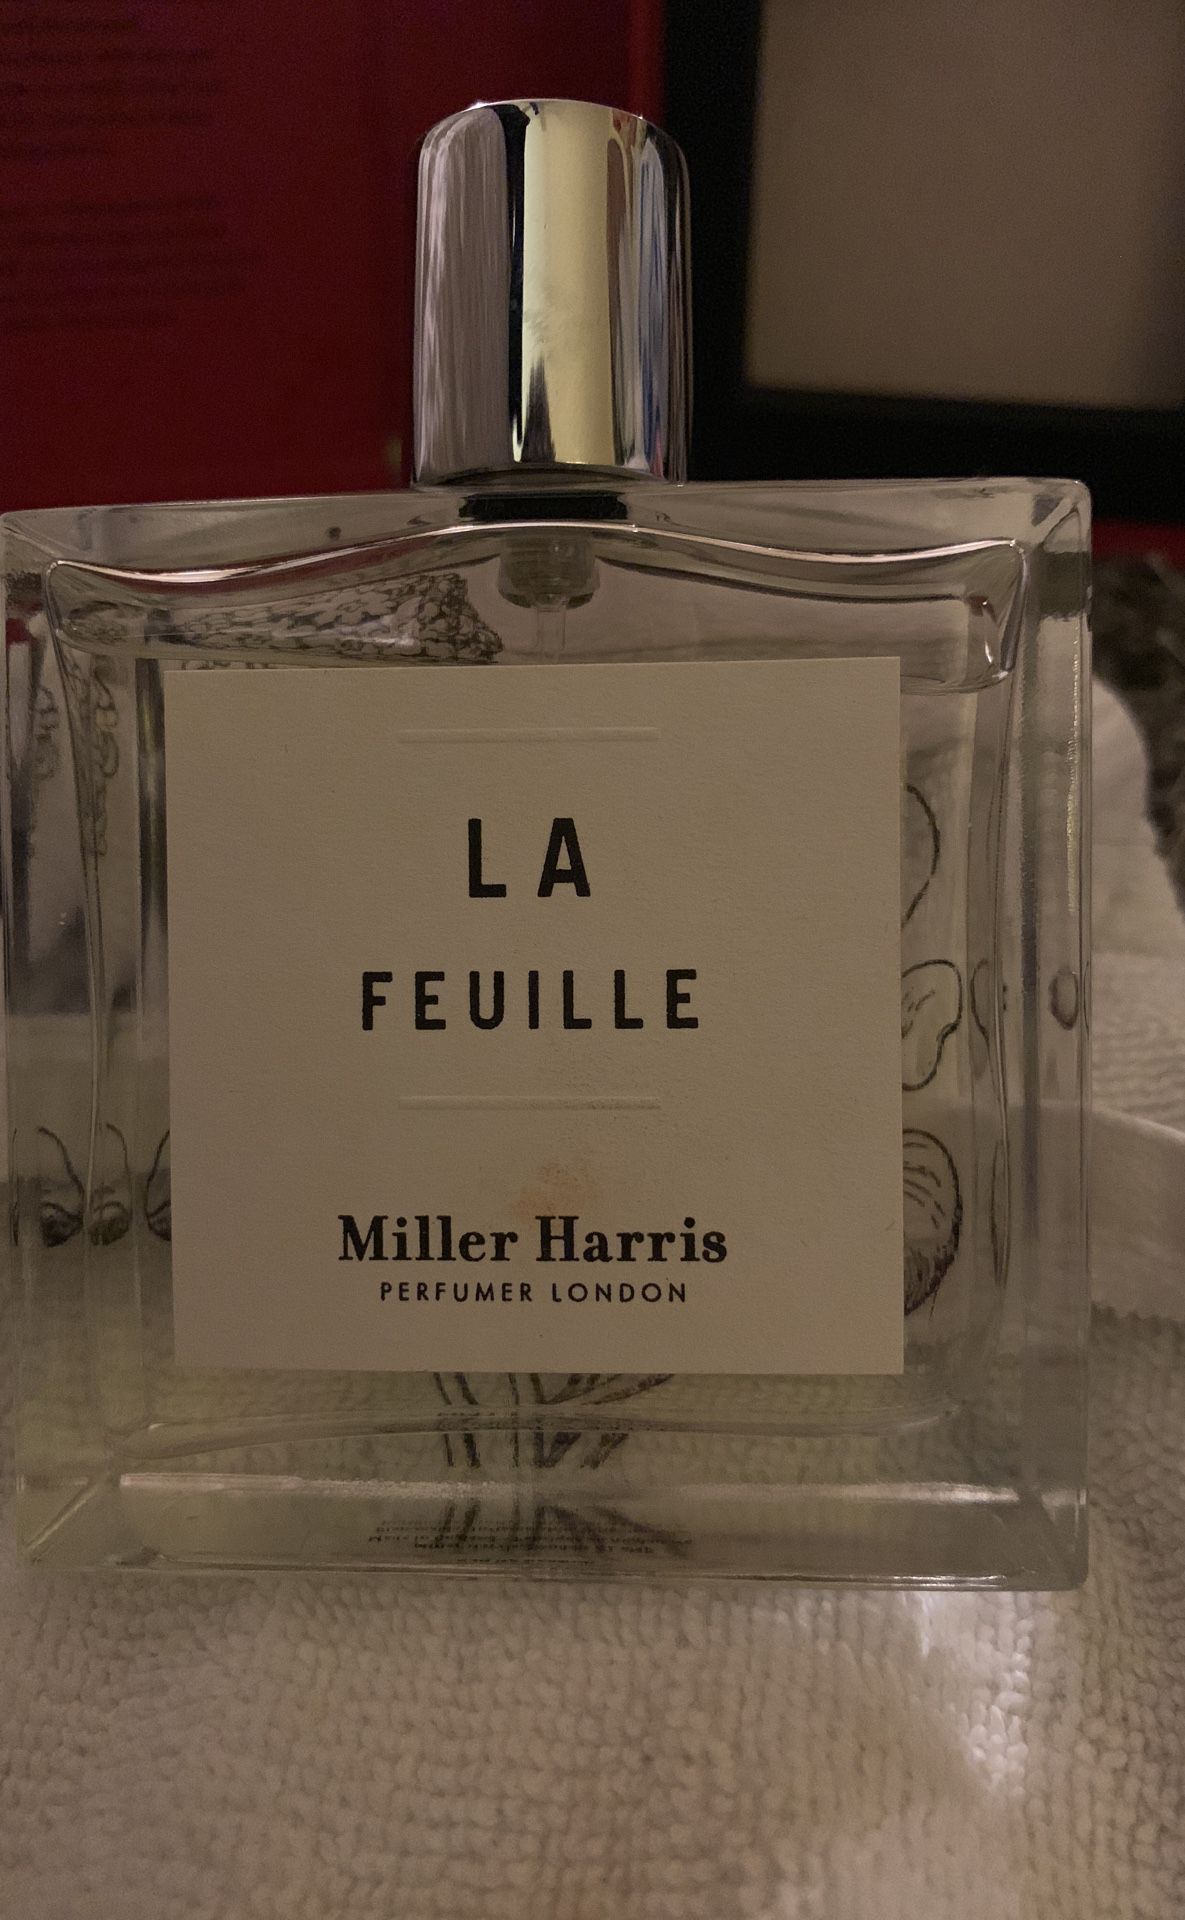 LA FEUILLE Miller Harris Perfumer London Perfumers Library EAU DE PARFUMERIE 100ML 3.4 fl. Oz.